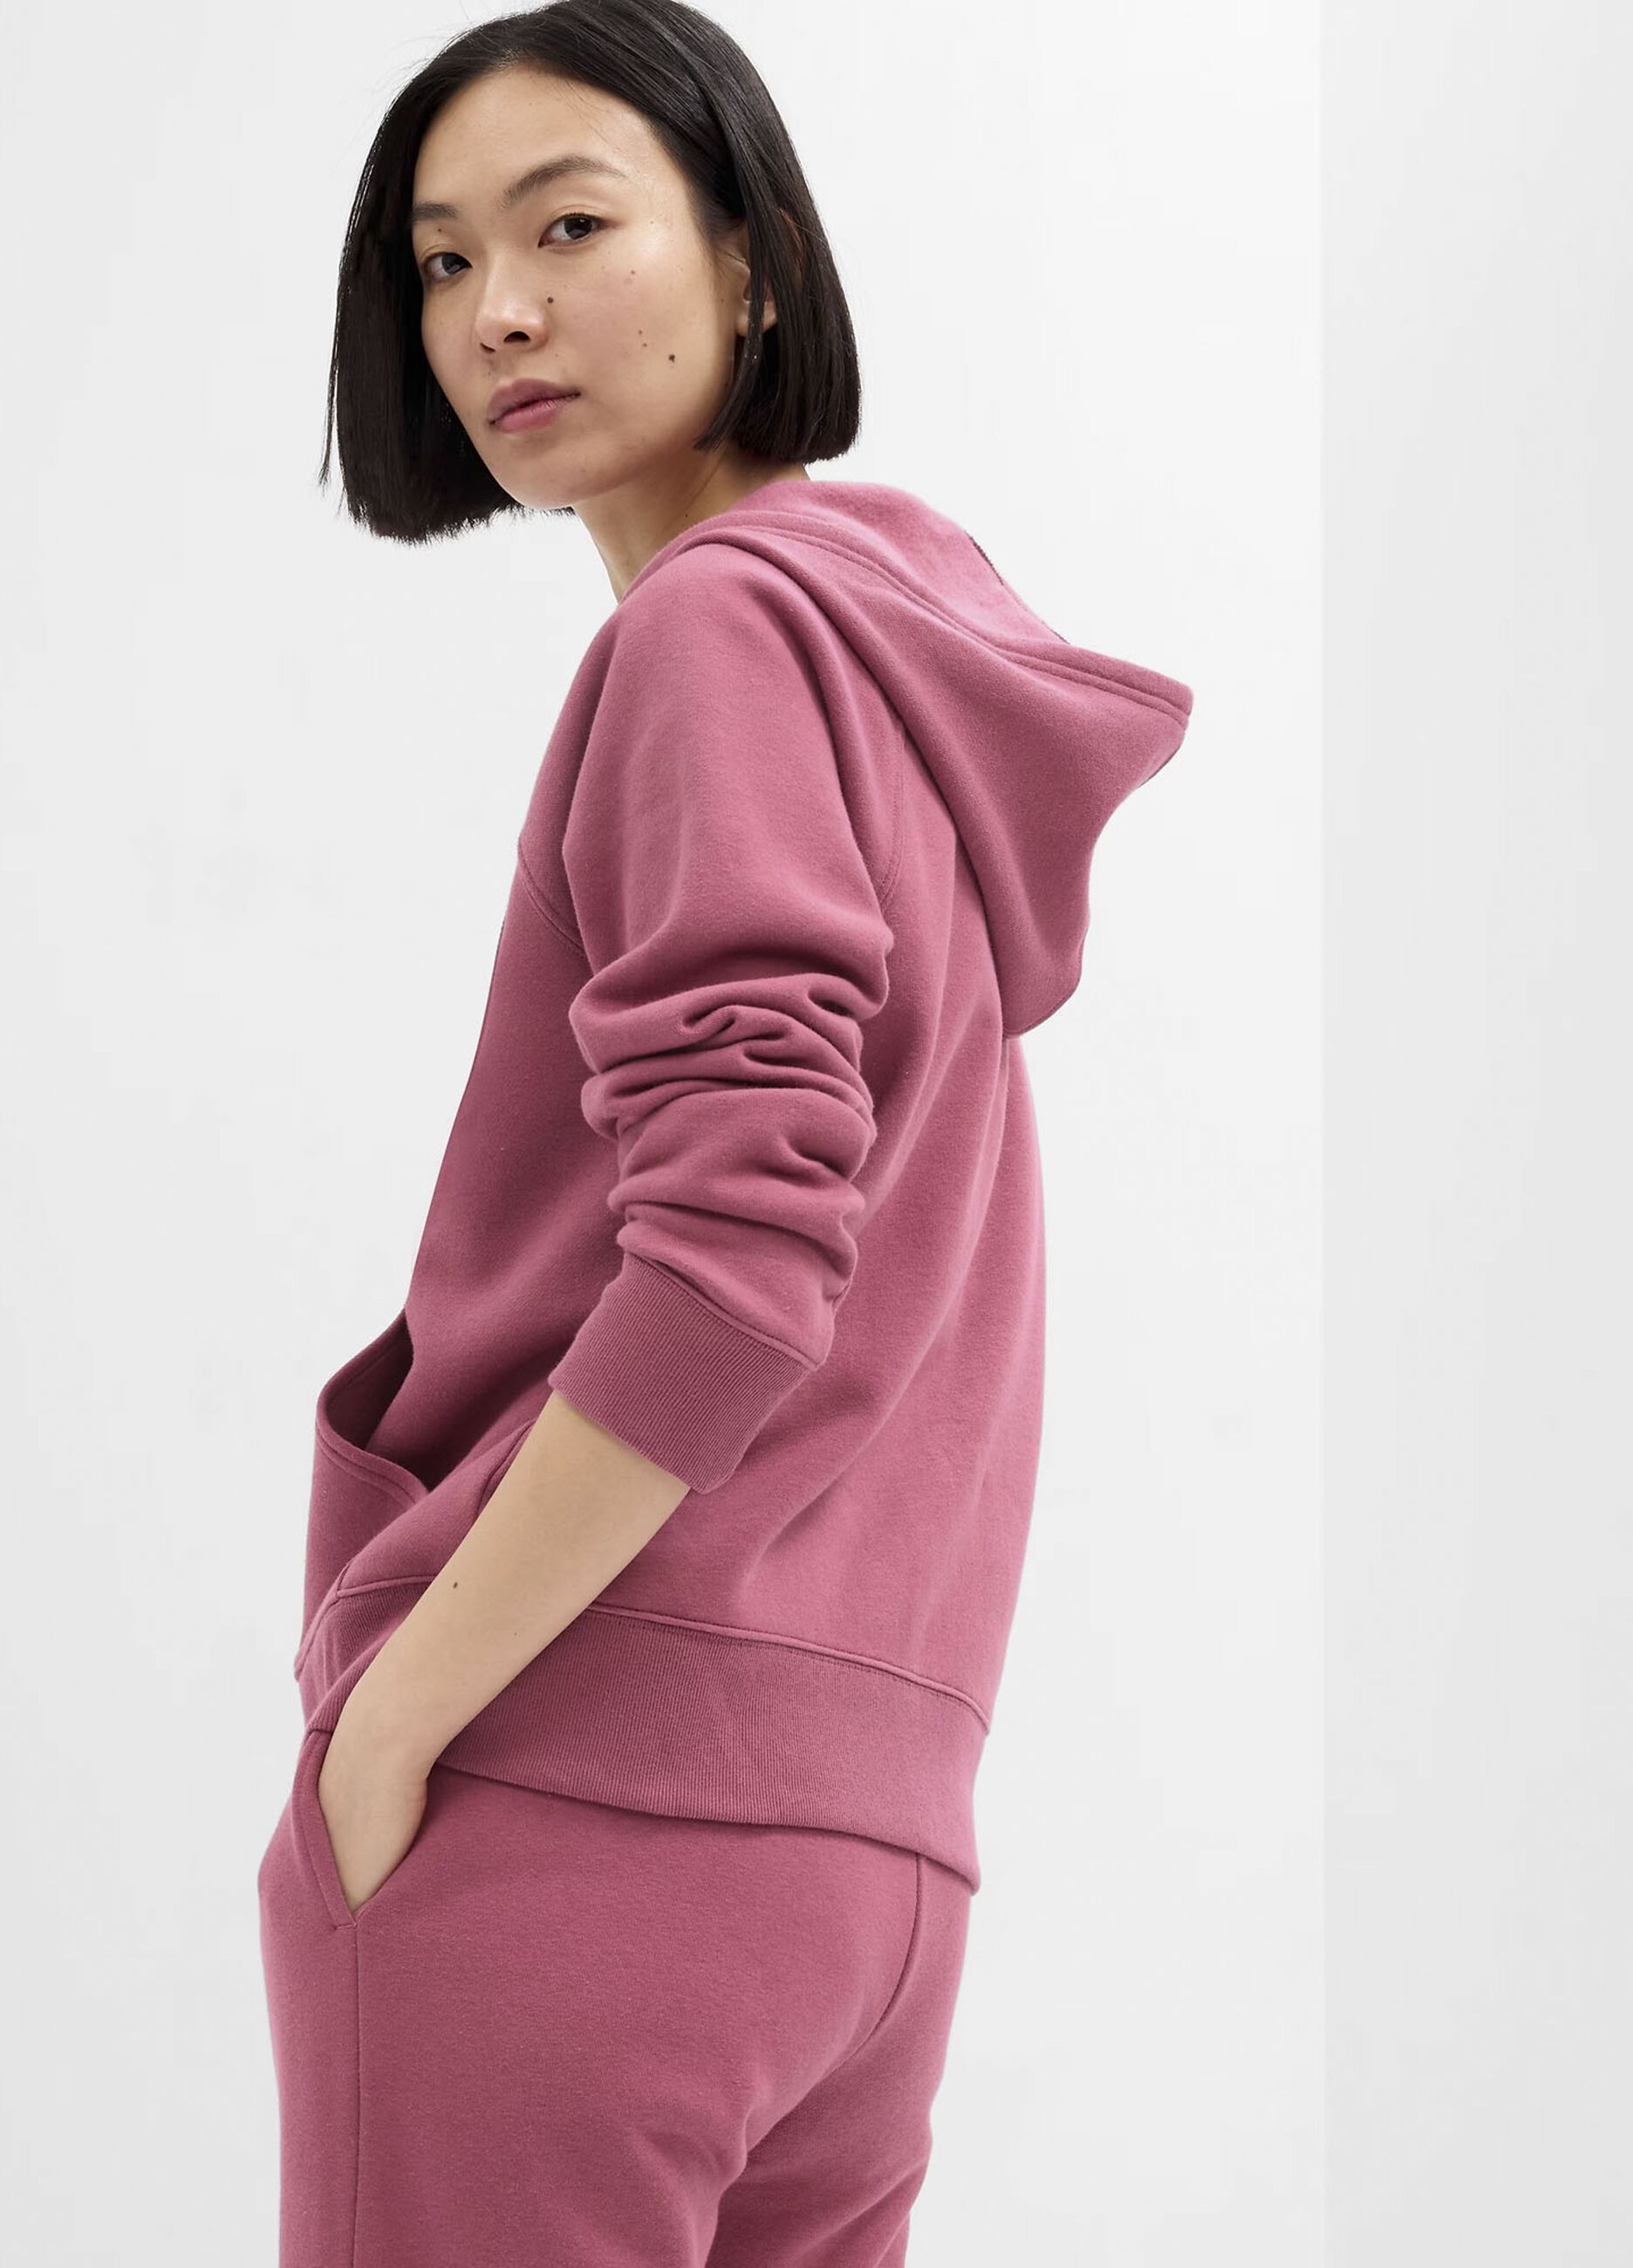 Full-zip sweatshirt with raglan sleeves and logo embroidery_1